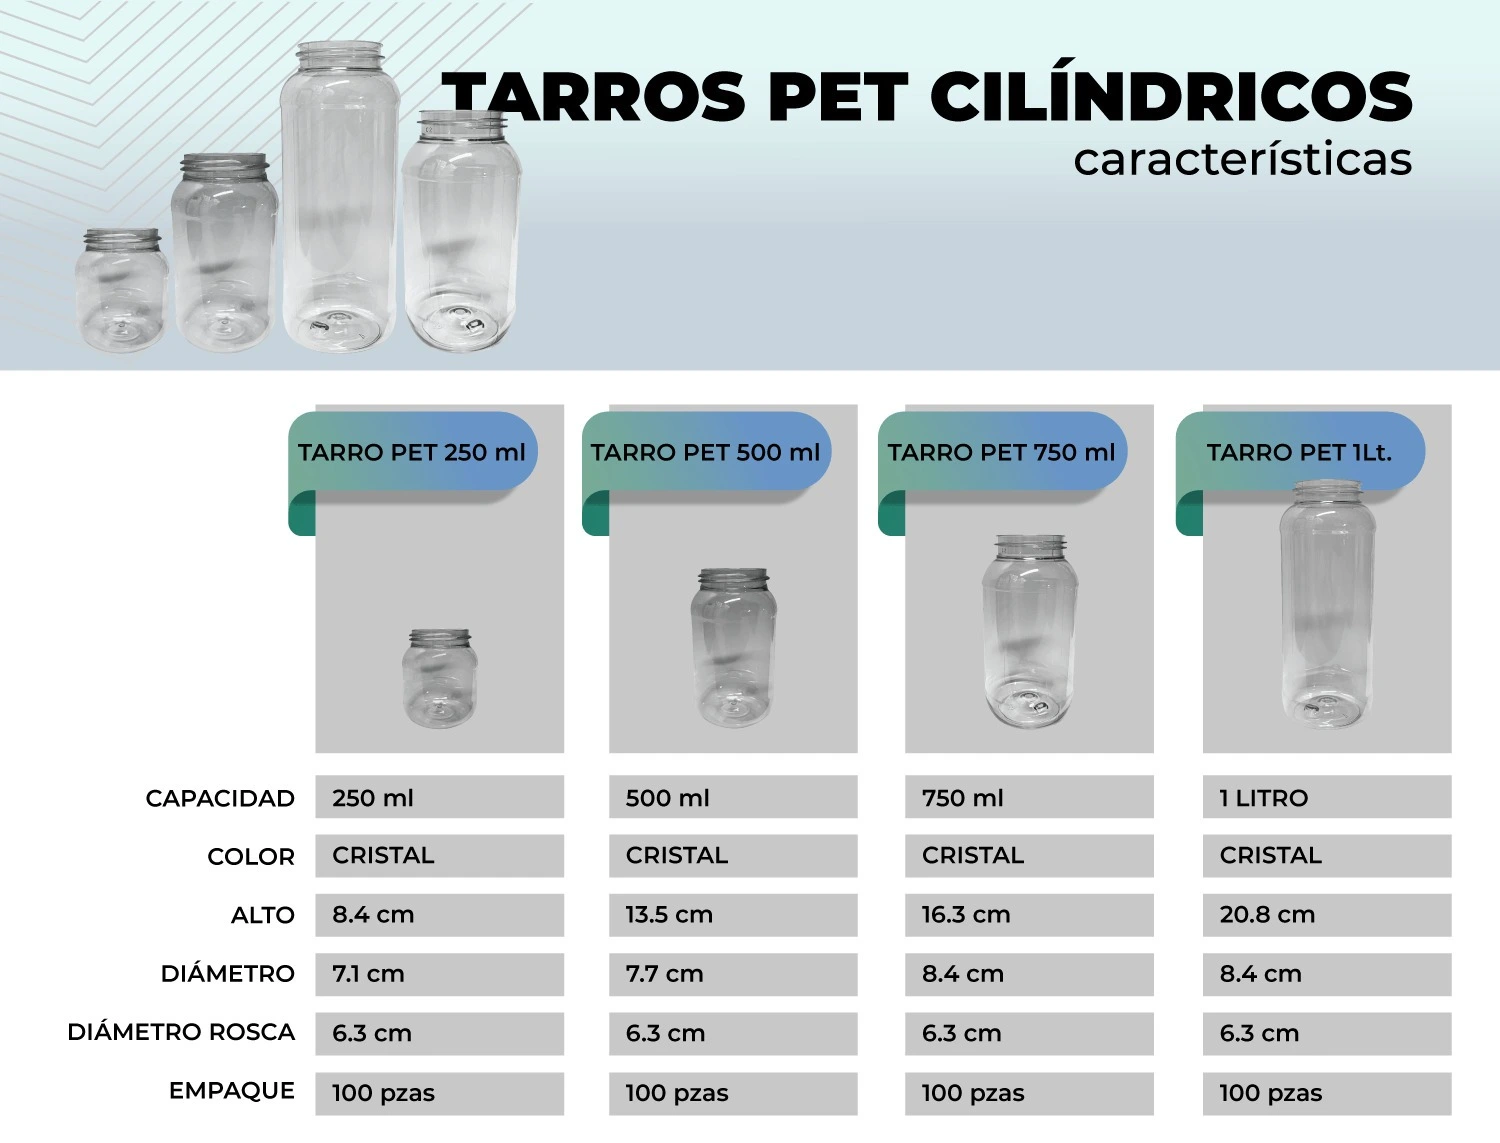 Tarro PET cilindricos